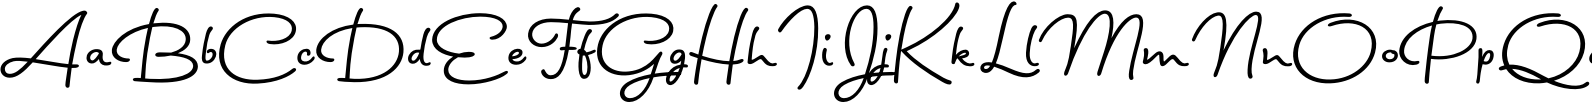 Signature Script Font OpenType